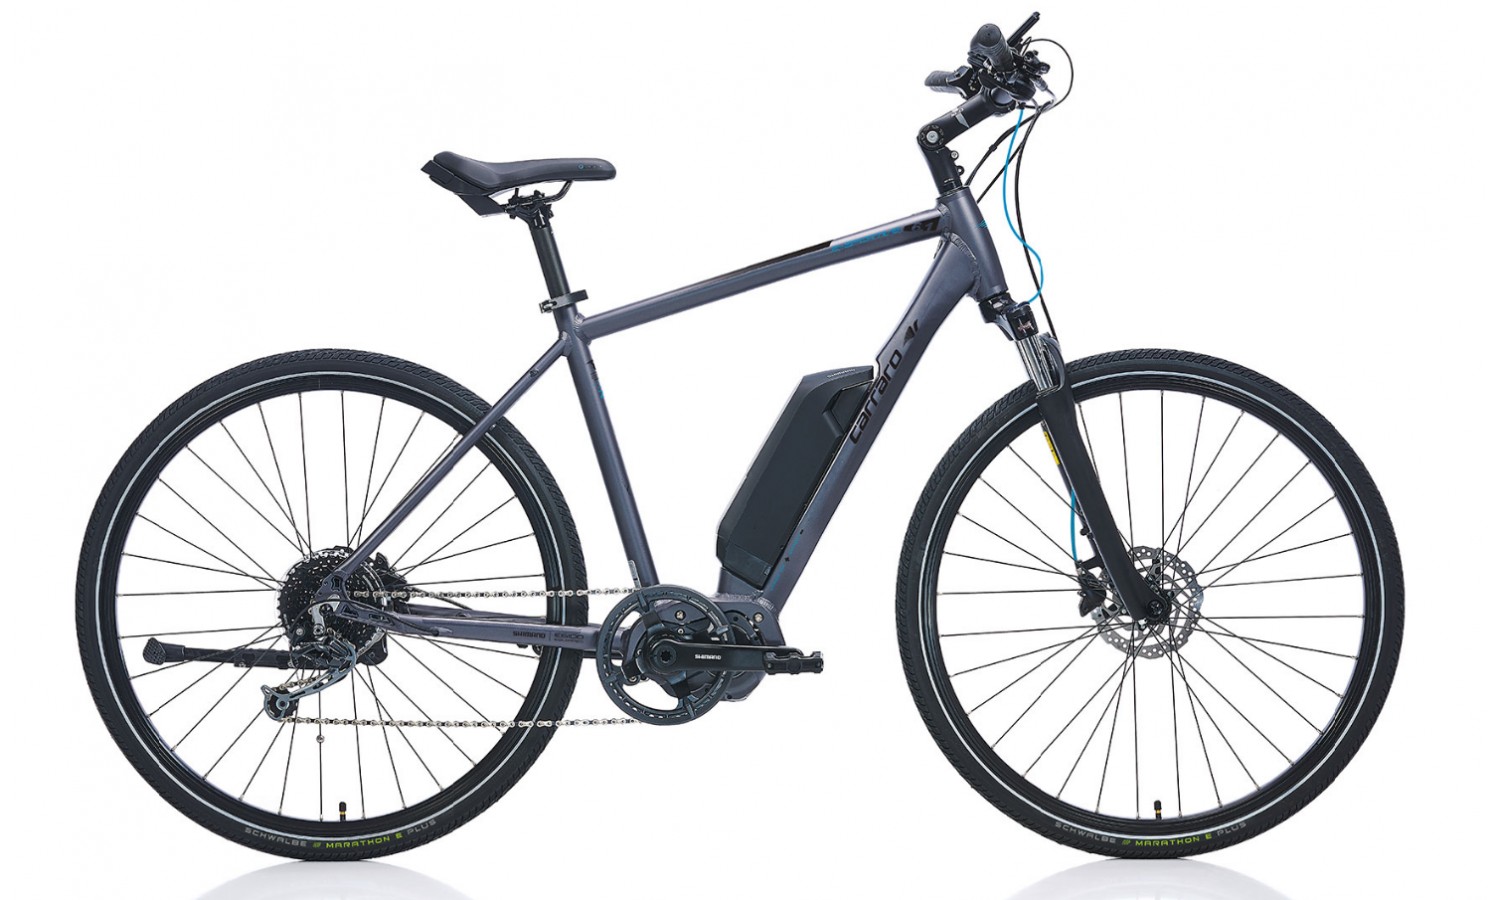 Carraro E-Sportive 6.1 28 Hd Elektrikli Bisiklet (Mat Antrasit Siyah Mavi)